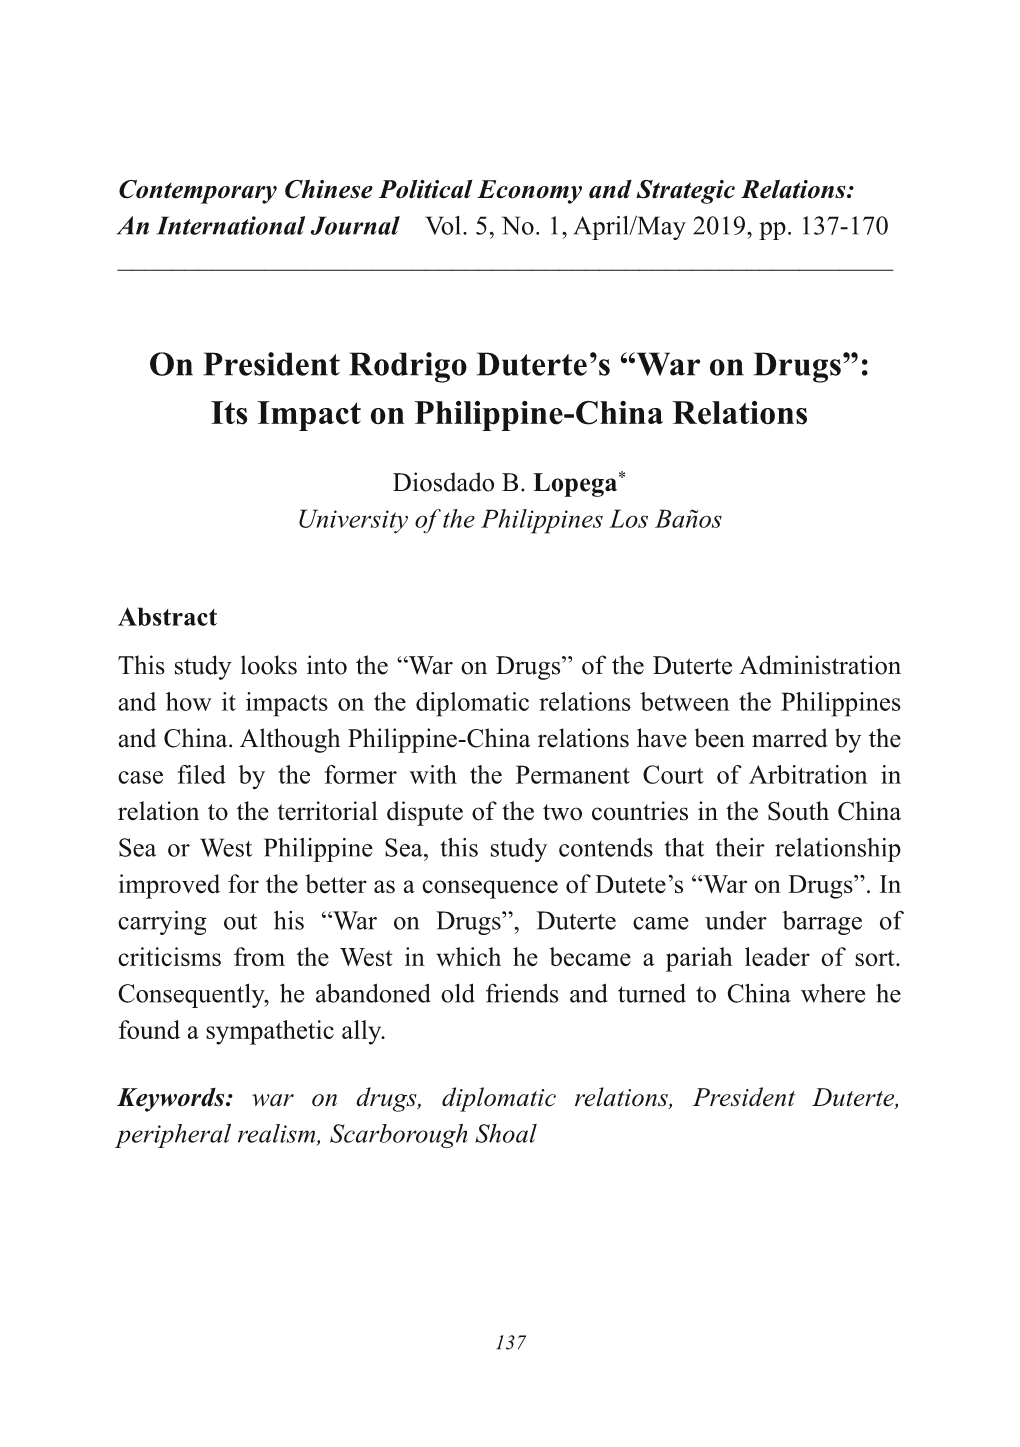 On President Rodrigo Duterte's “War on Drugs”: Its Impact on Philippinechina Relations